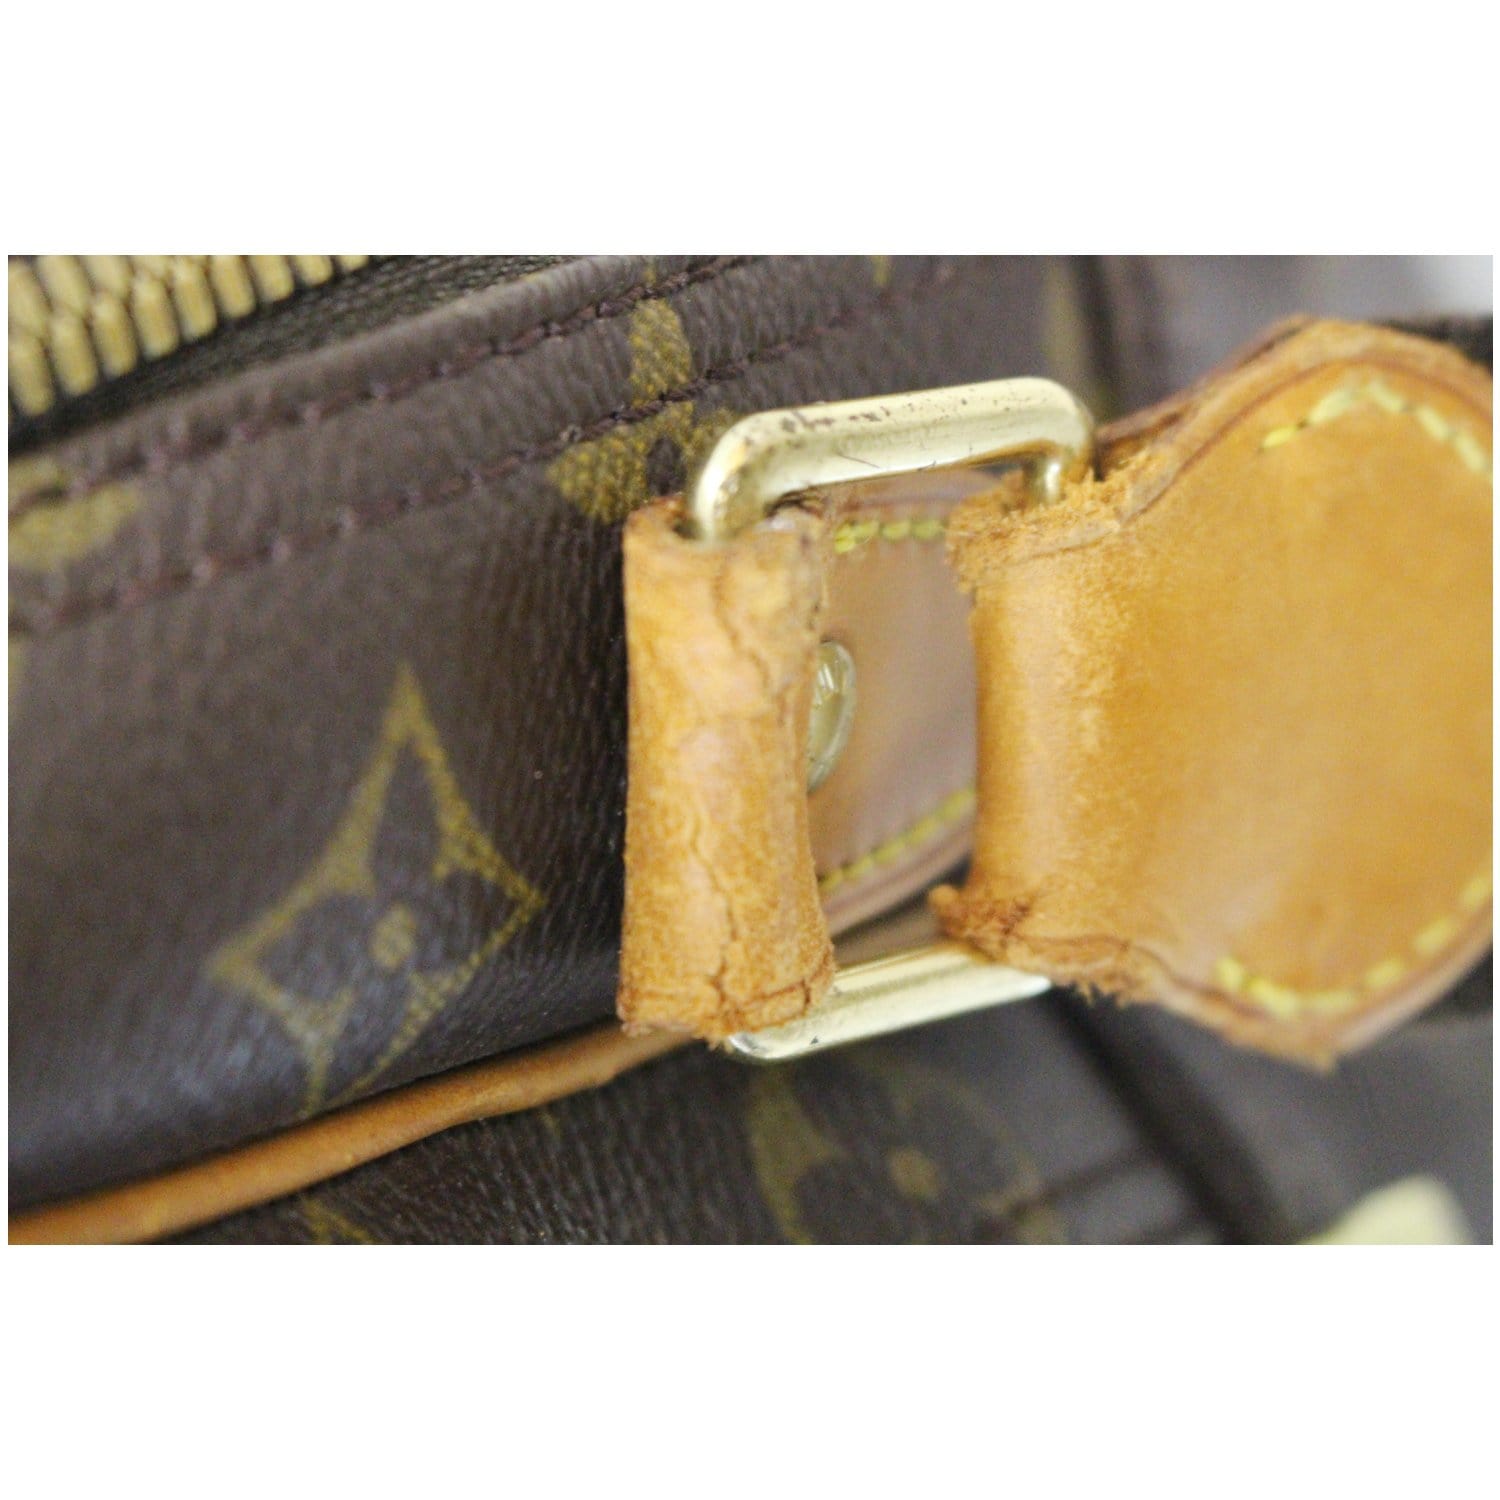 LOUIS VUITTON Handbag Stamp Bag PM Cruise Line M95239 Suede Leather Gray  Women